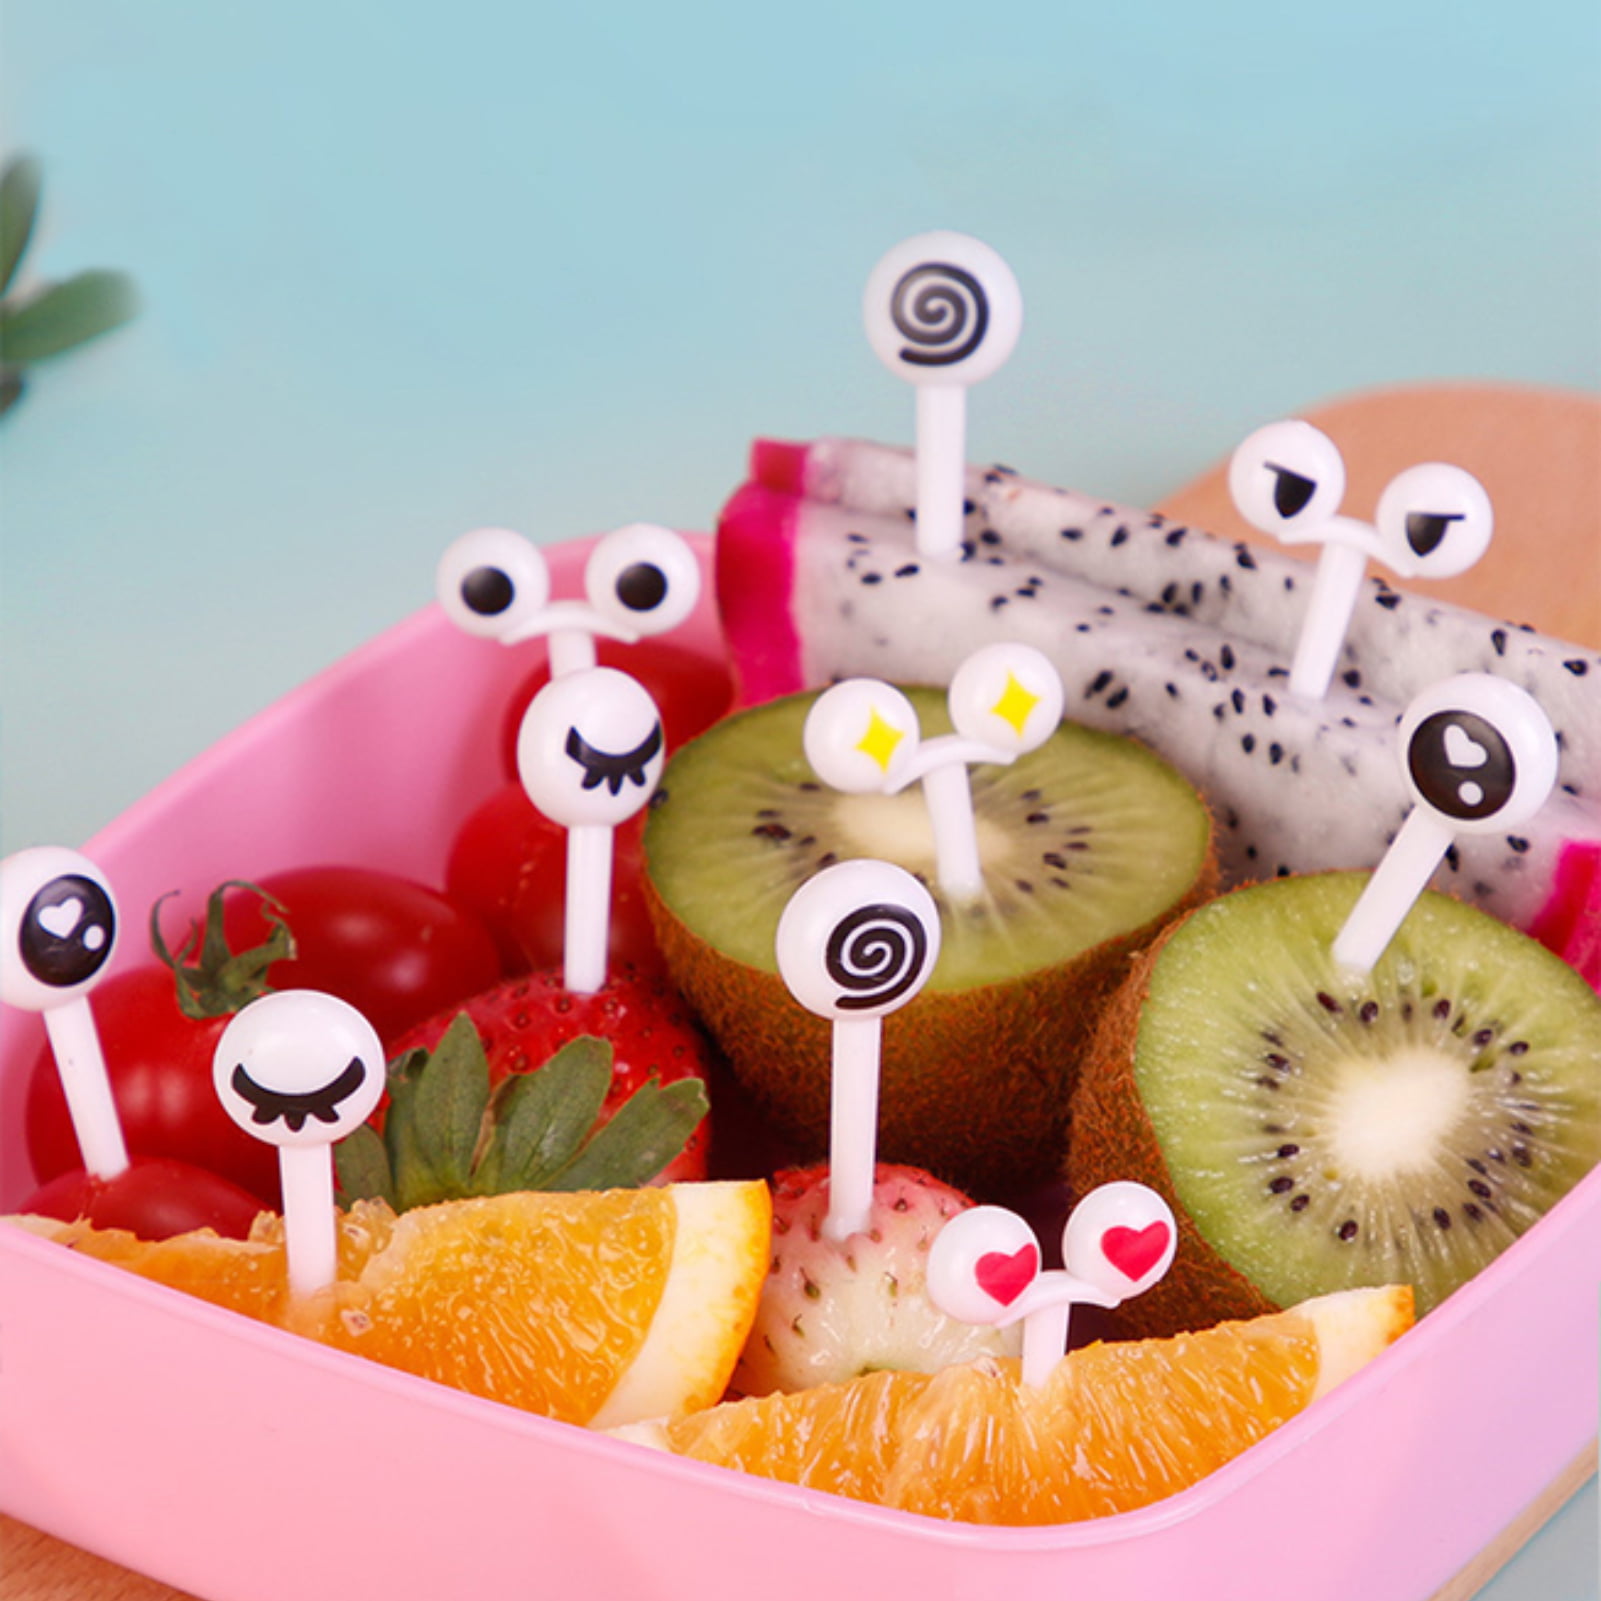 Starlett 40pcs Animal Fruit Food Picks Bento Box Picks Mini Cartoon Animal Food Toothpicks Lunch Bento Forks Picks for Kids, Multicolor